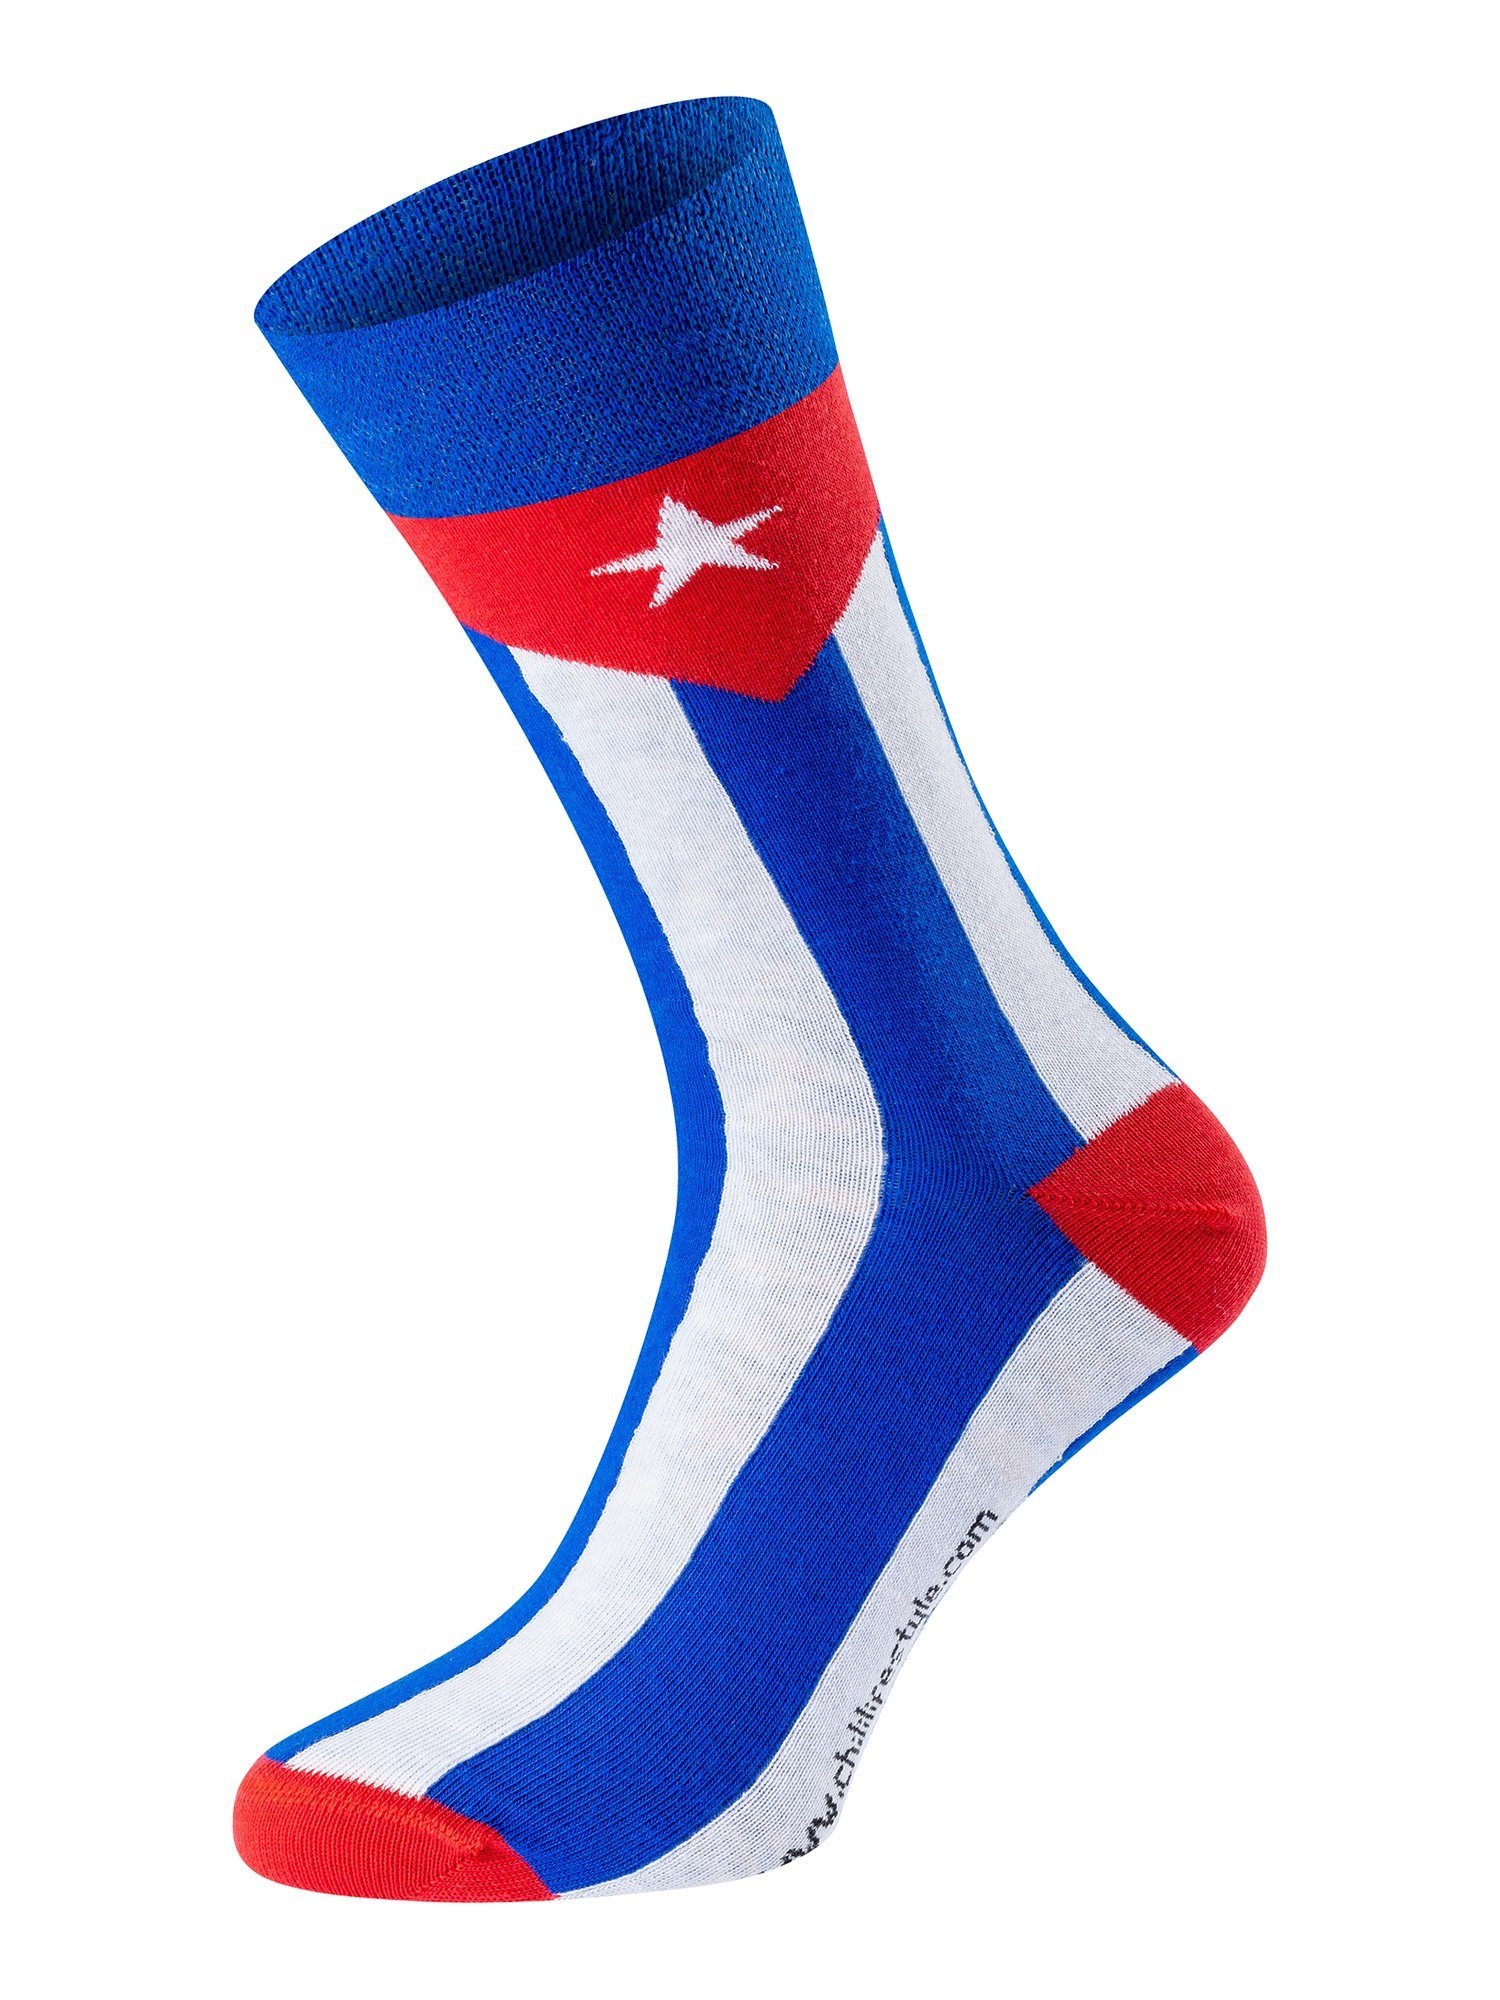 Leisure Lifestyle Fidel Freizeitsocken Banderole Socks Chili